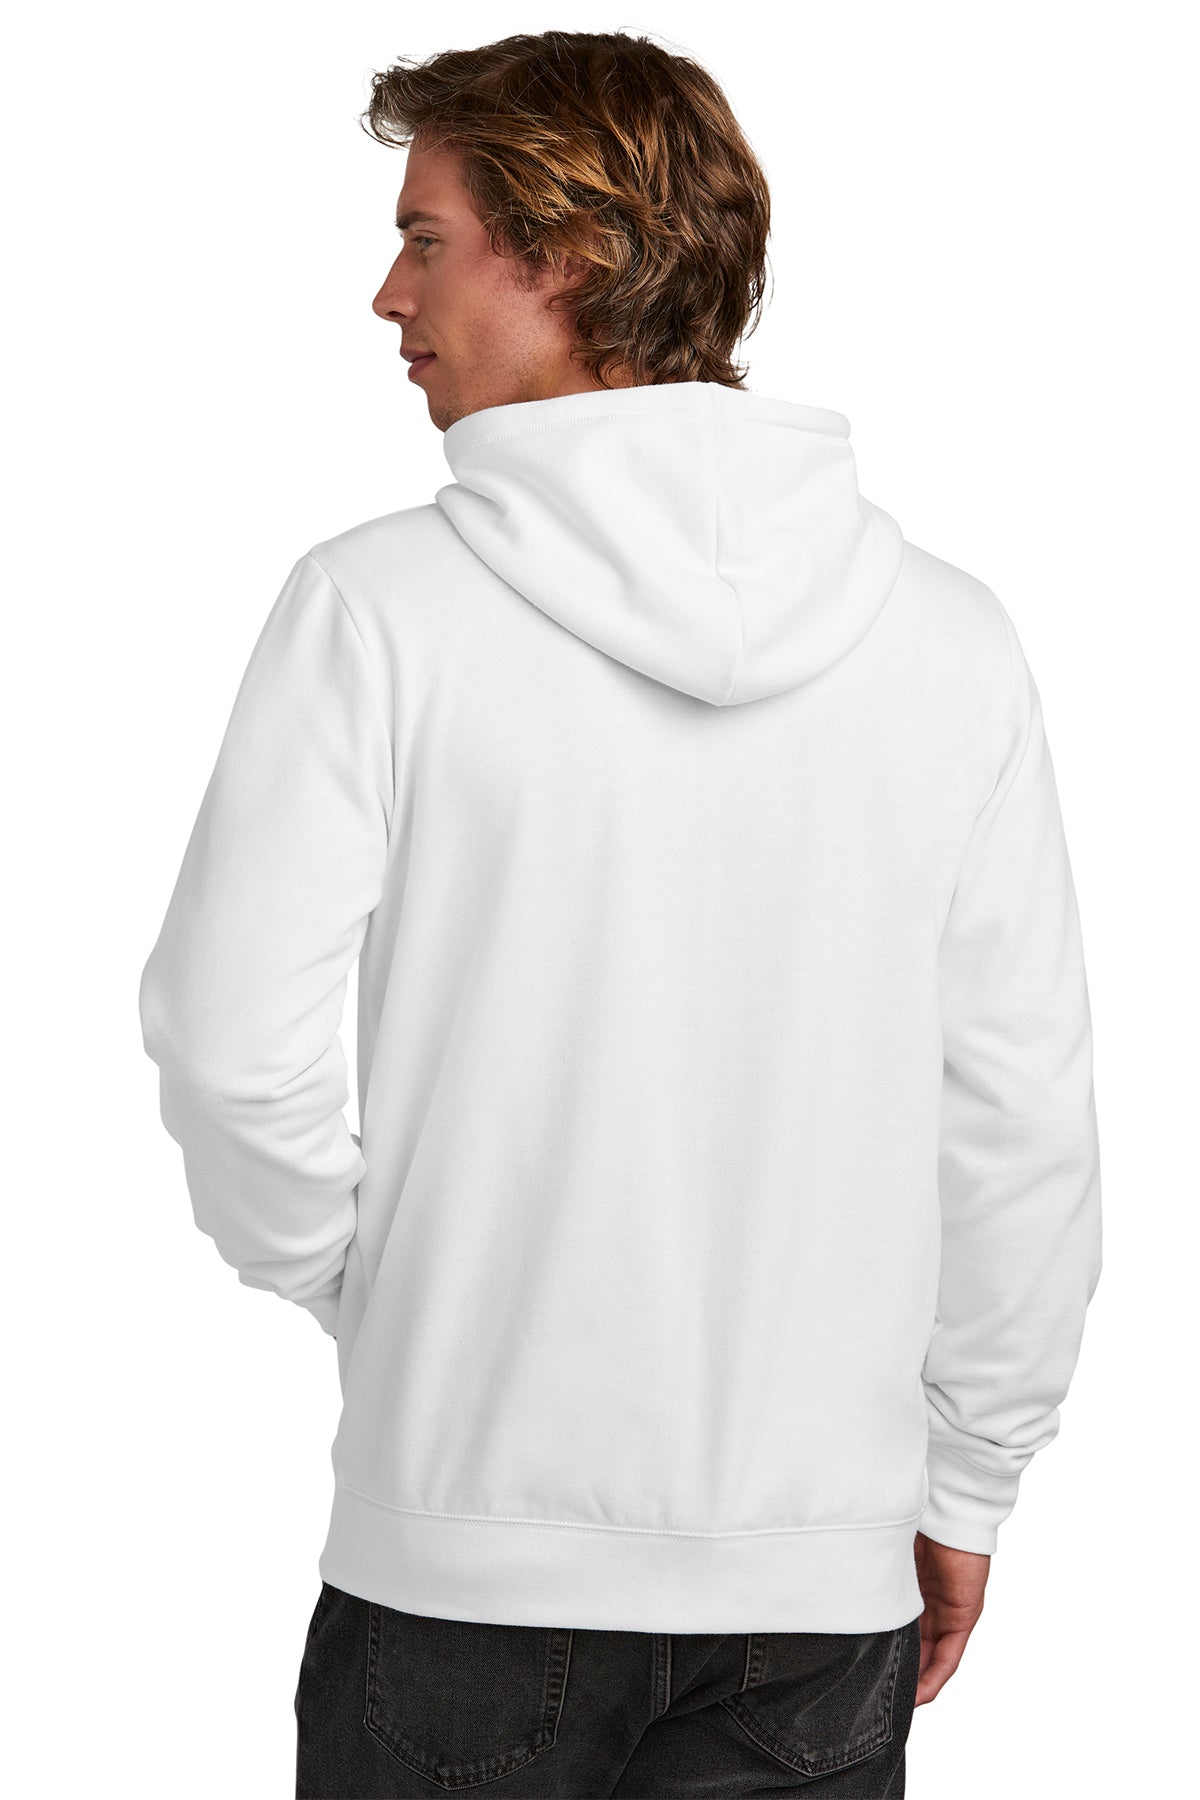 New Era Comeback Fleece Full-Zip Custom Hoodies, White